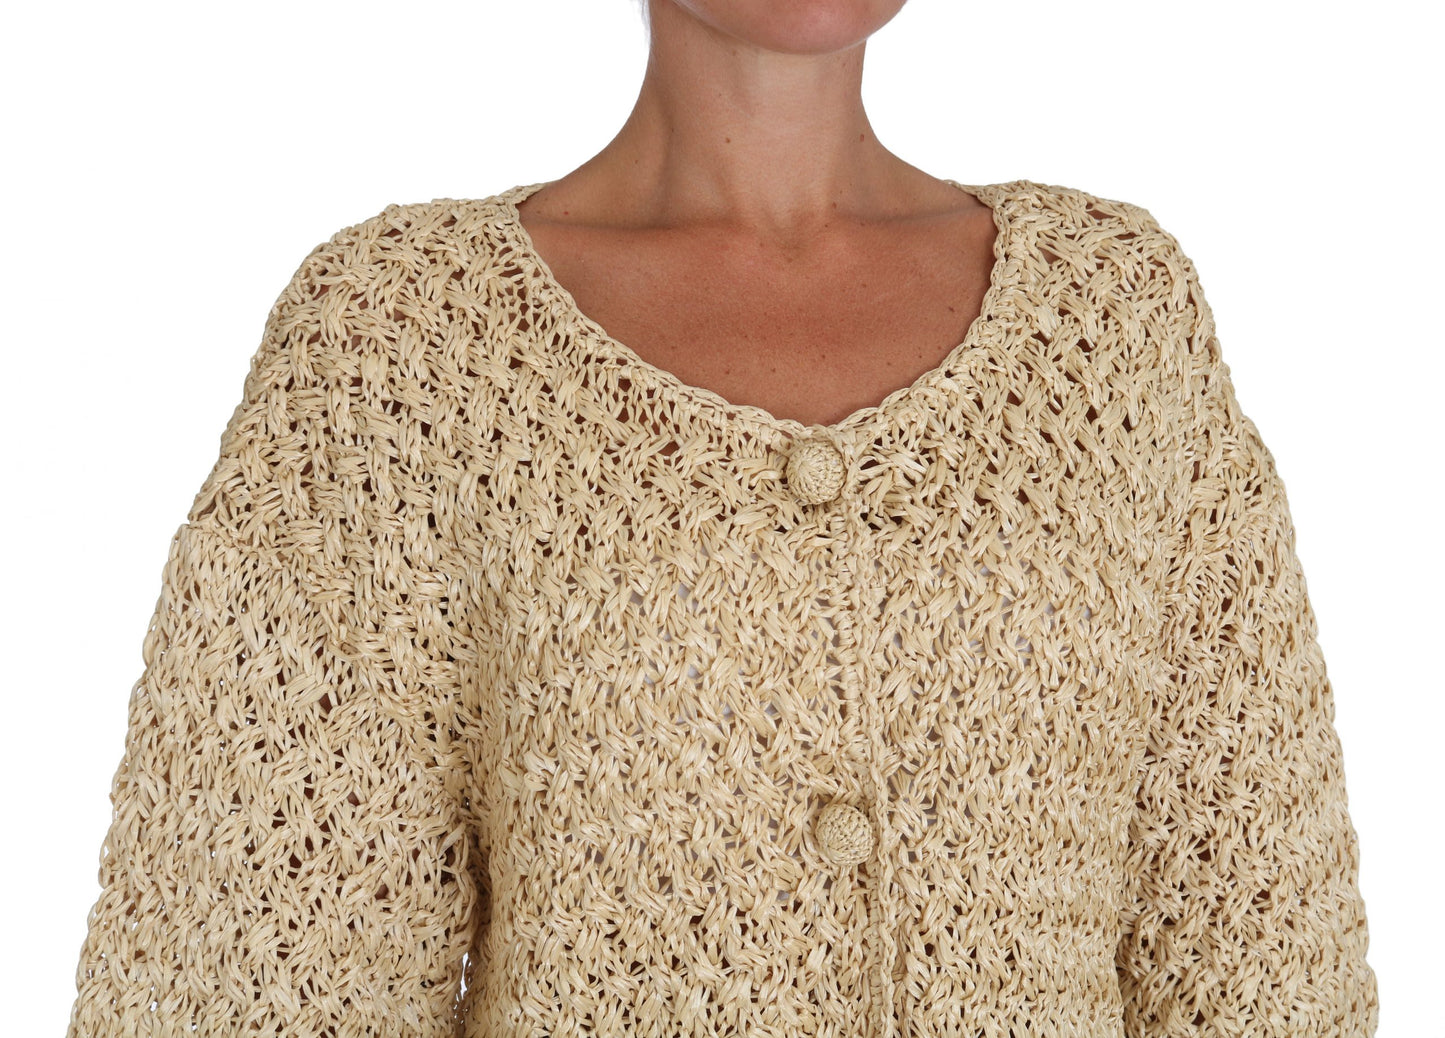 Chic Beige Crochet Knitted Raffia Cardigan